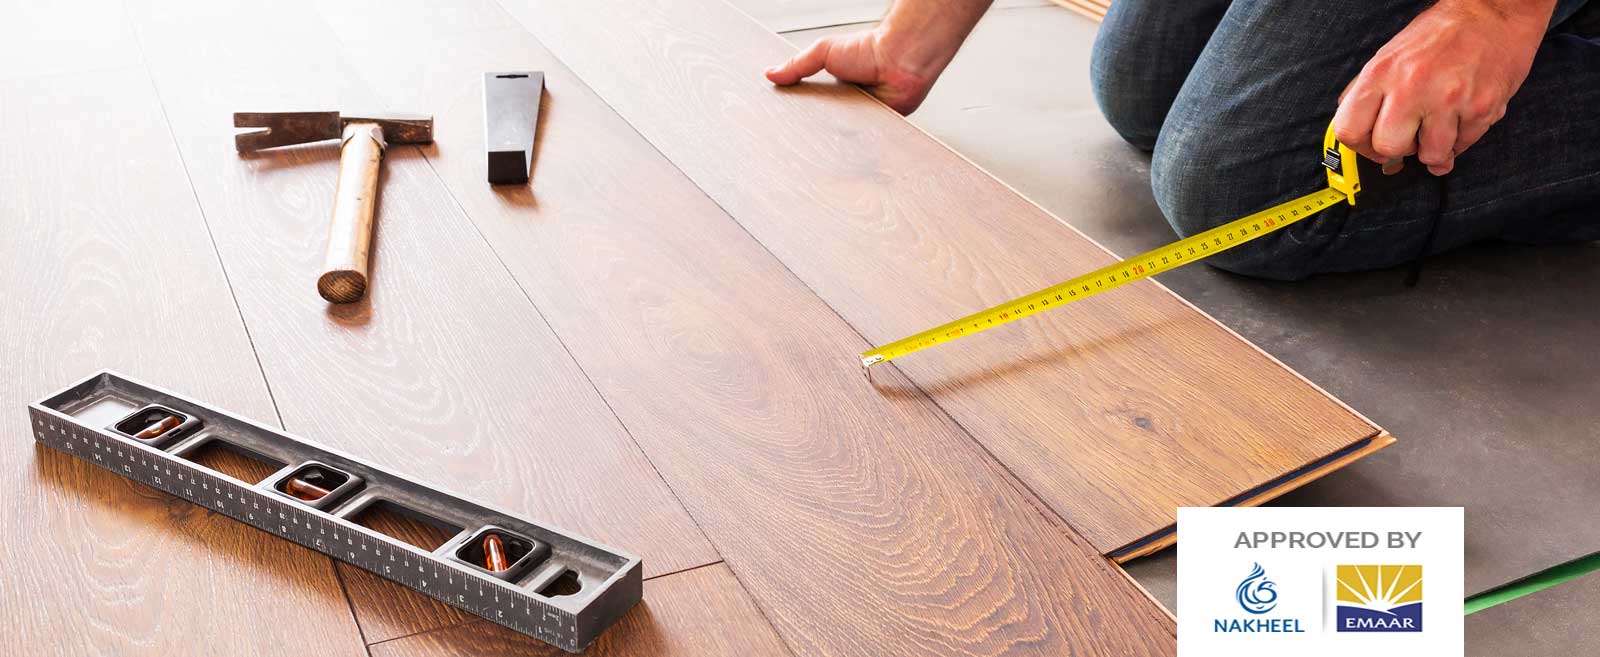 Carpentry and Flooring Services in Dubai